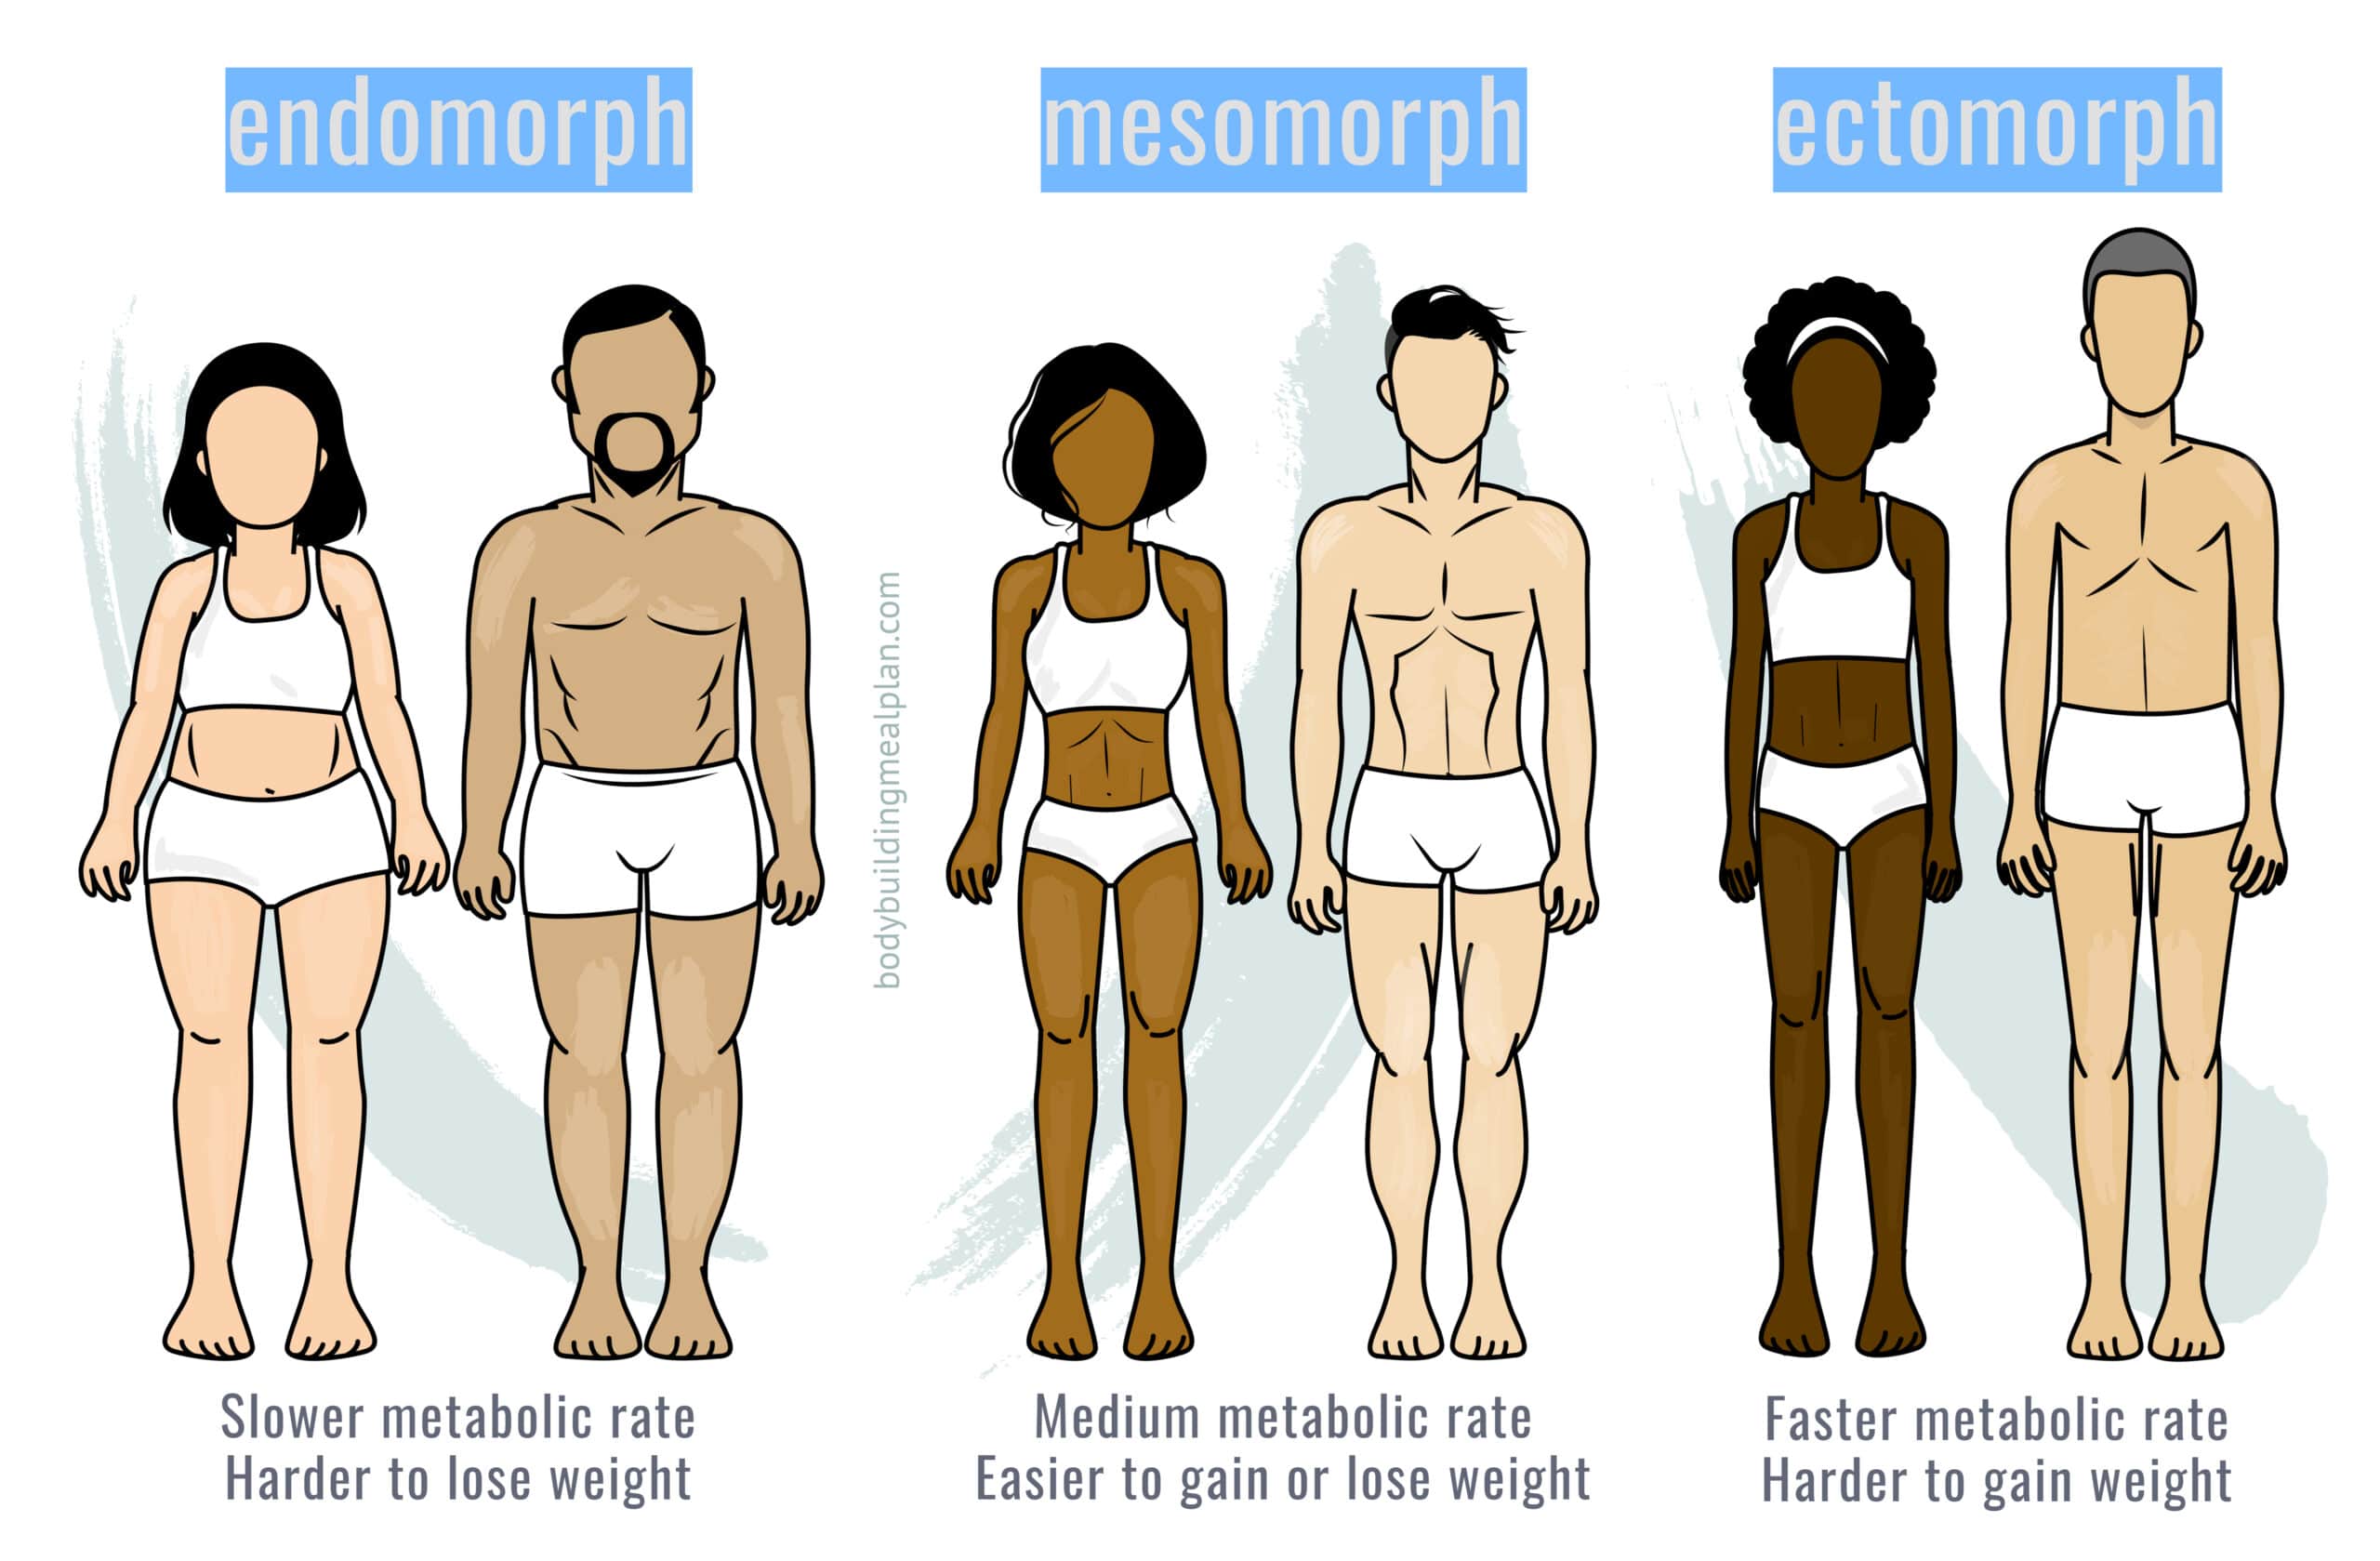 endomorph body type diet